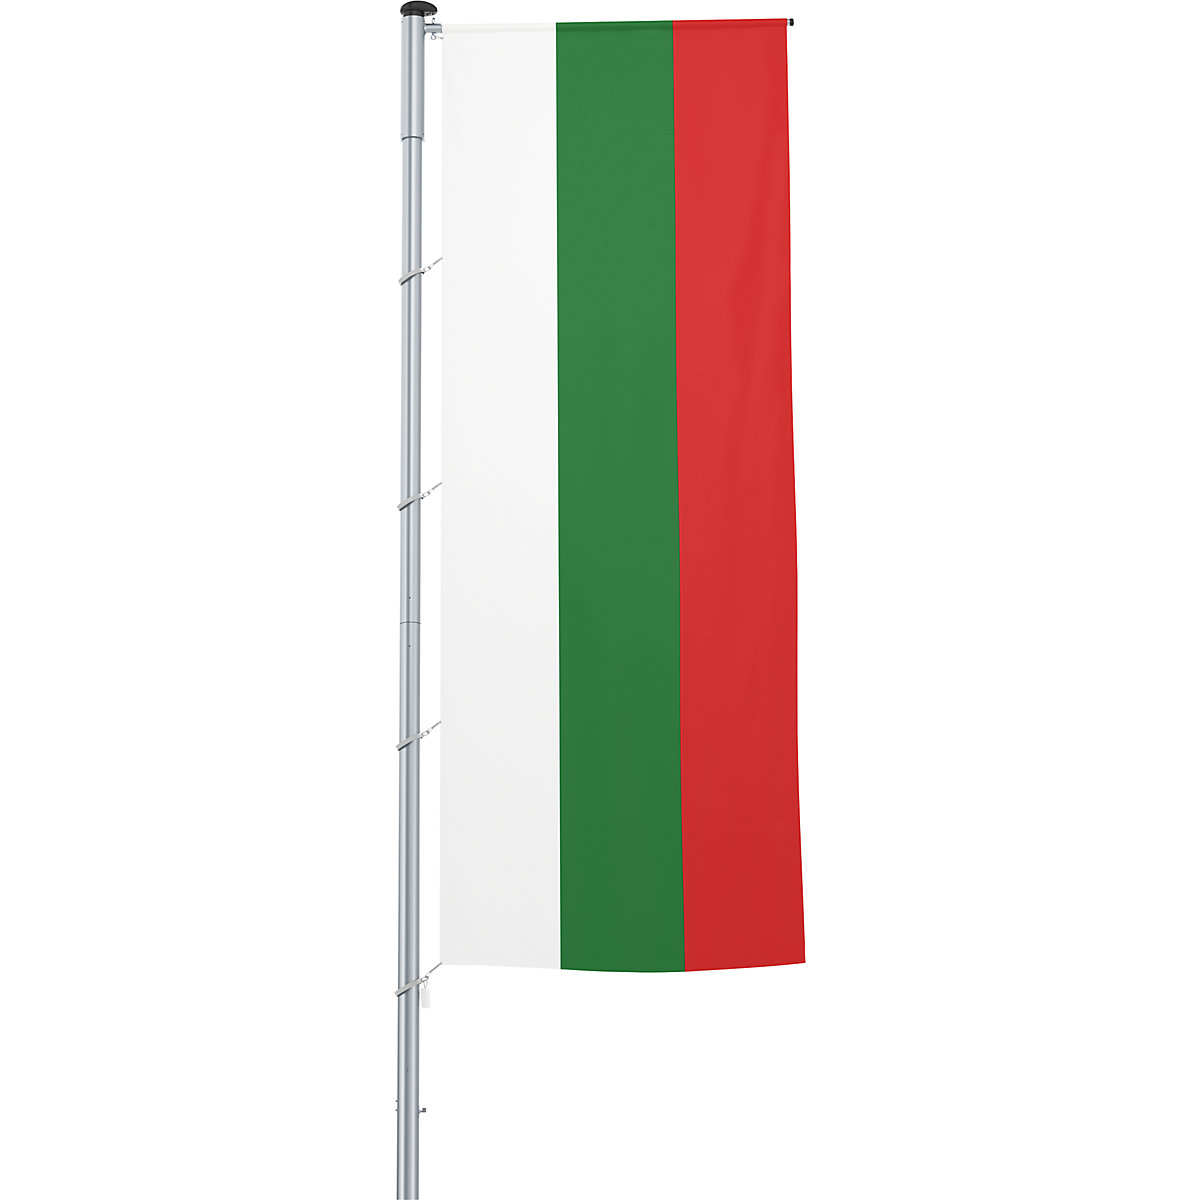 Steag pentru braț/drapel național – Mannus, format 1,2 x 3 m, Bulgaria-22